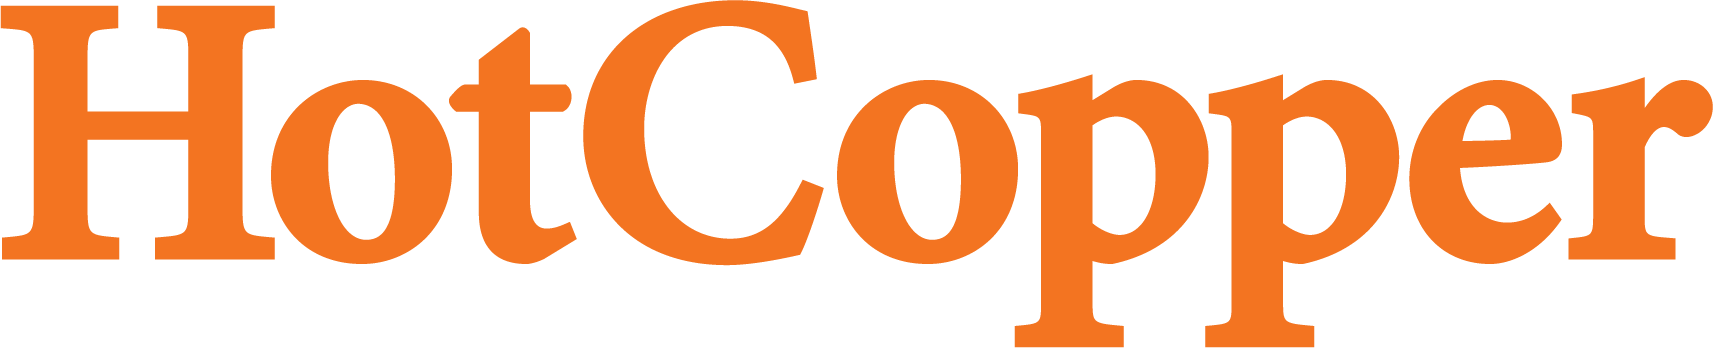 hotcopper-logo